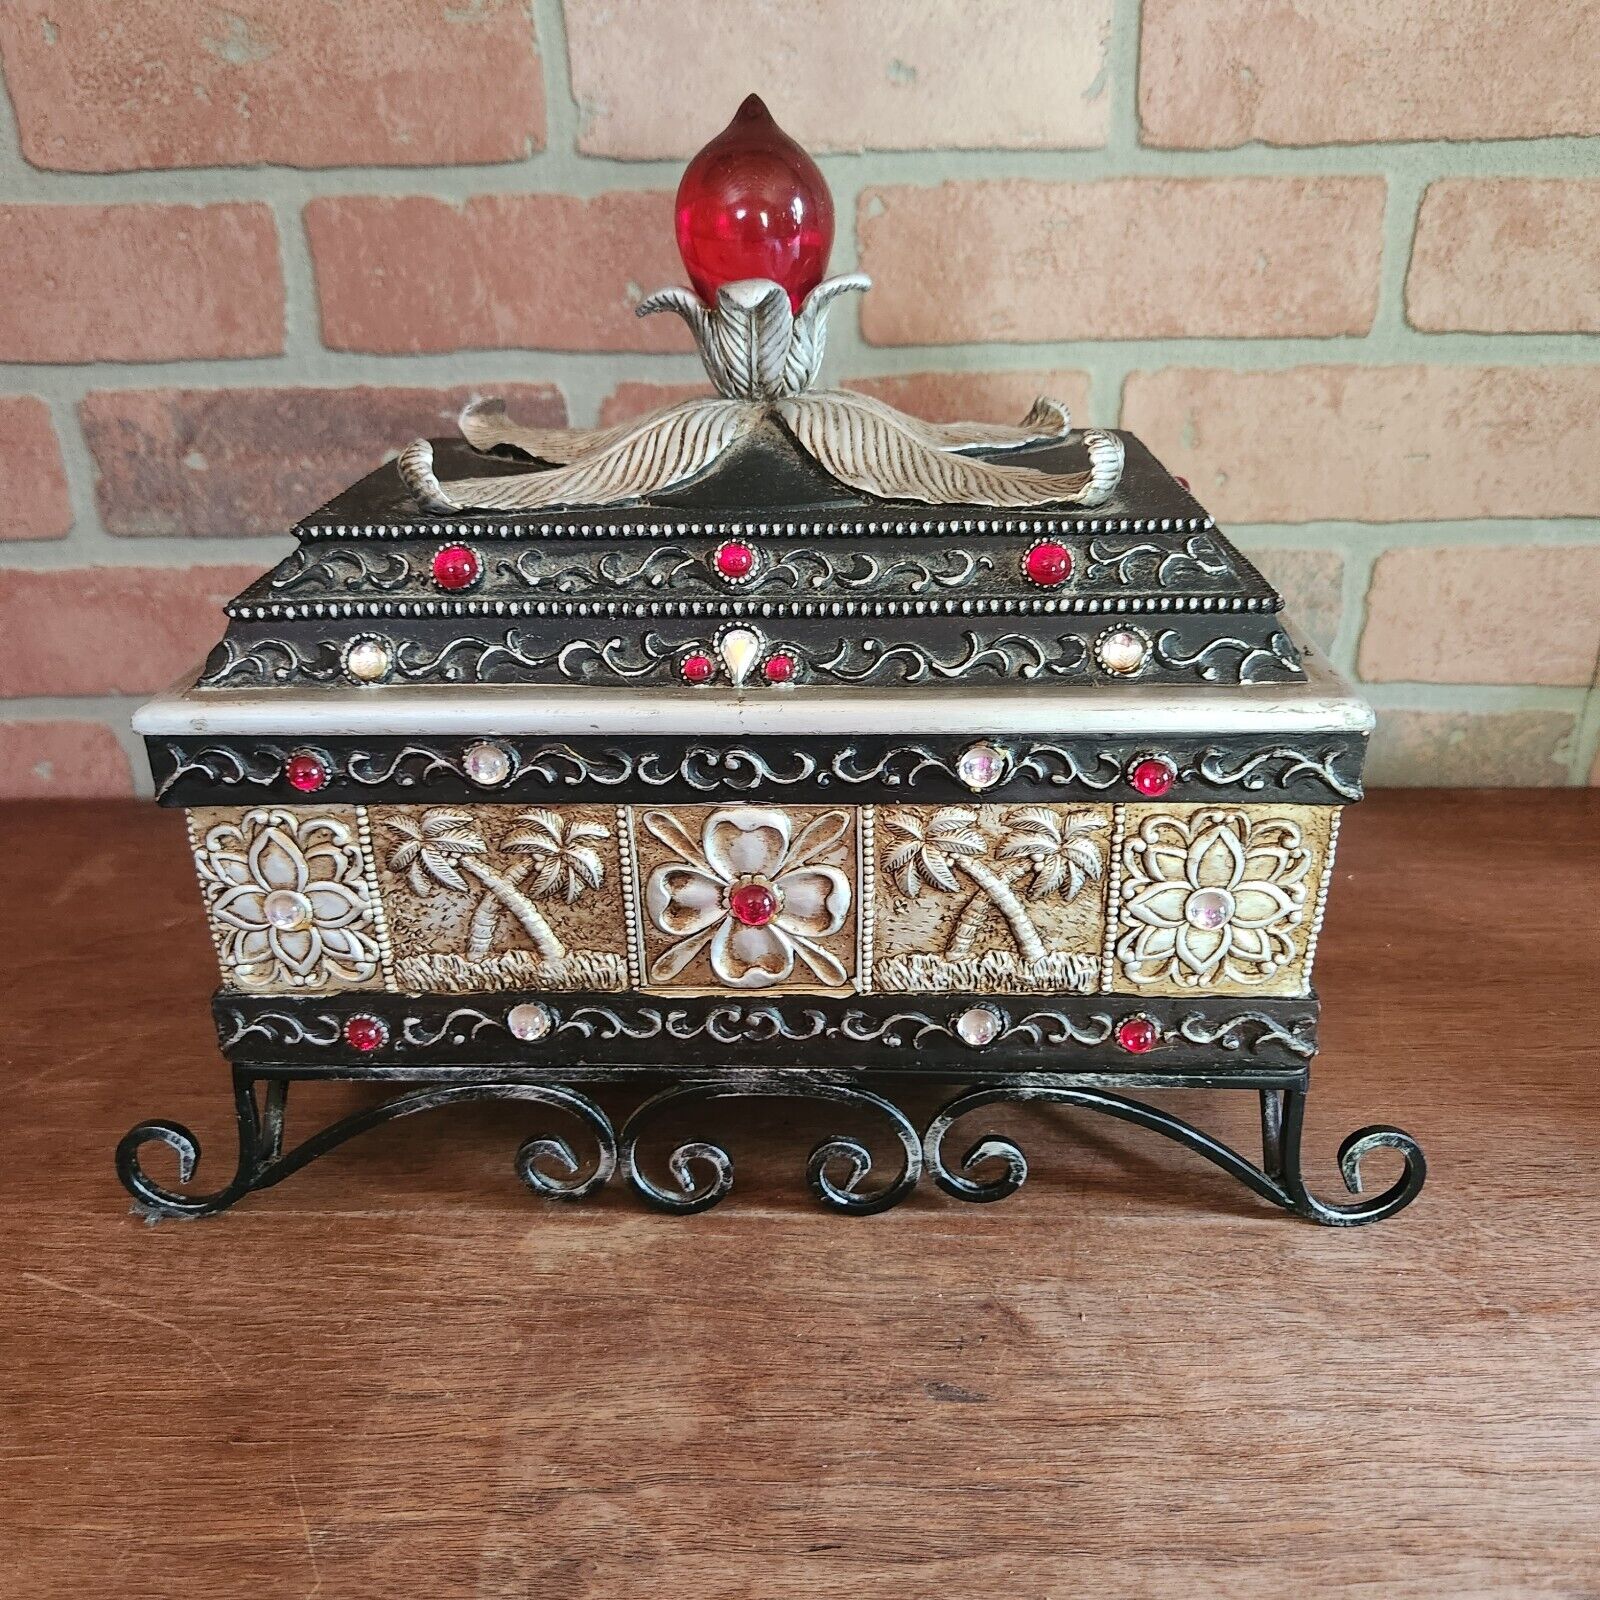 Lg Witchy Mystical Box Keepsake Stones Black Red Ornate Scroll Jewelry